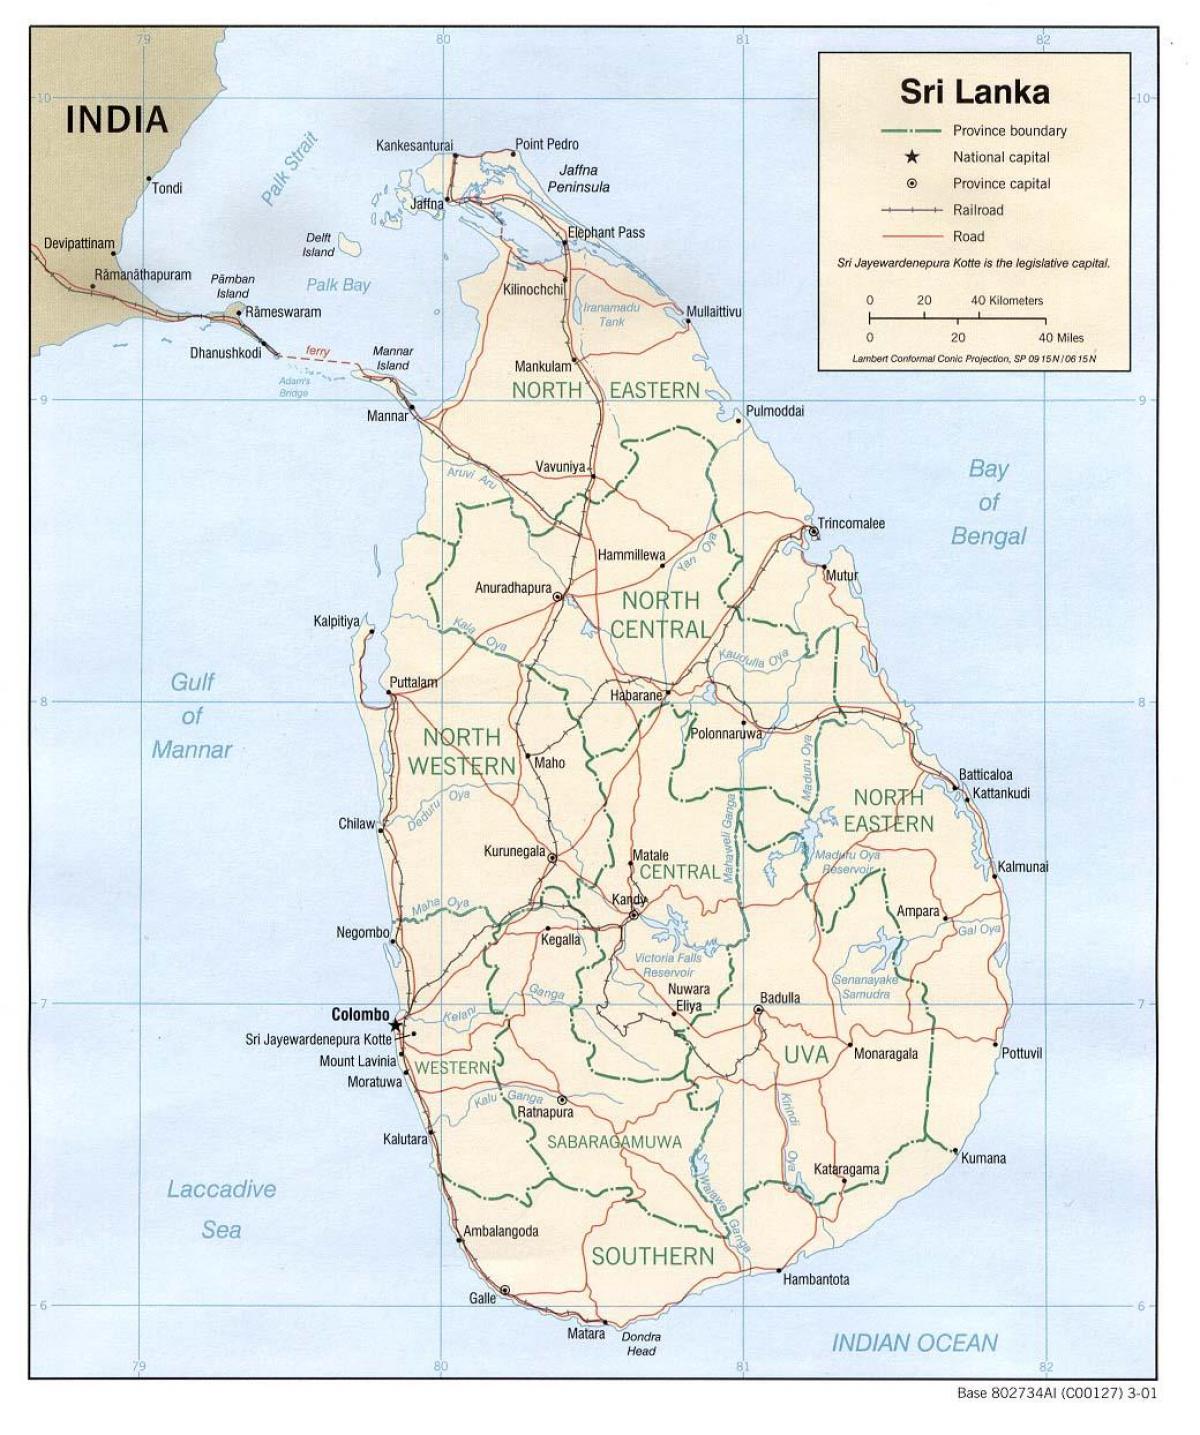 Sri Lanka otobis kat jeyografik